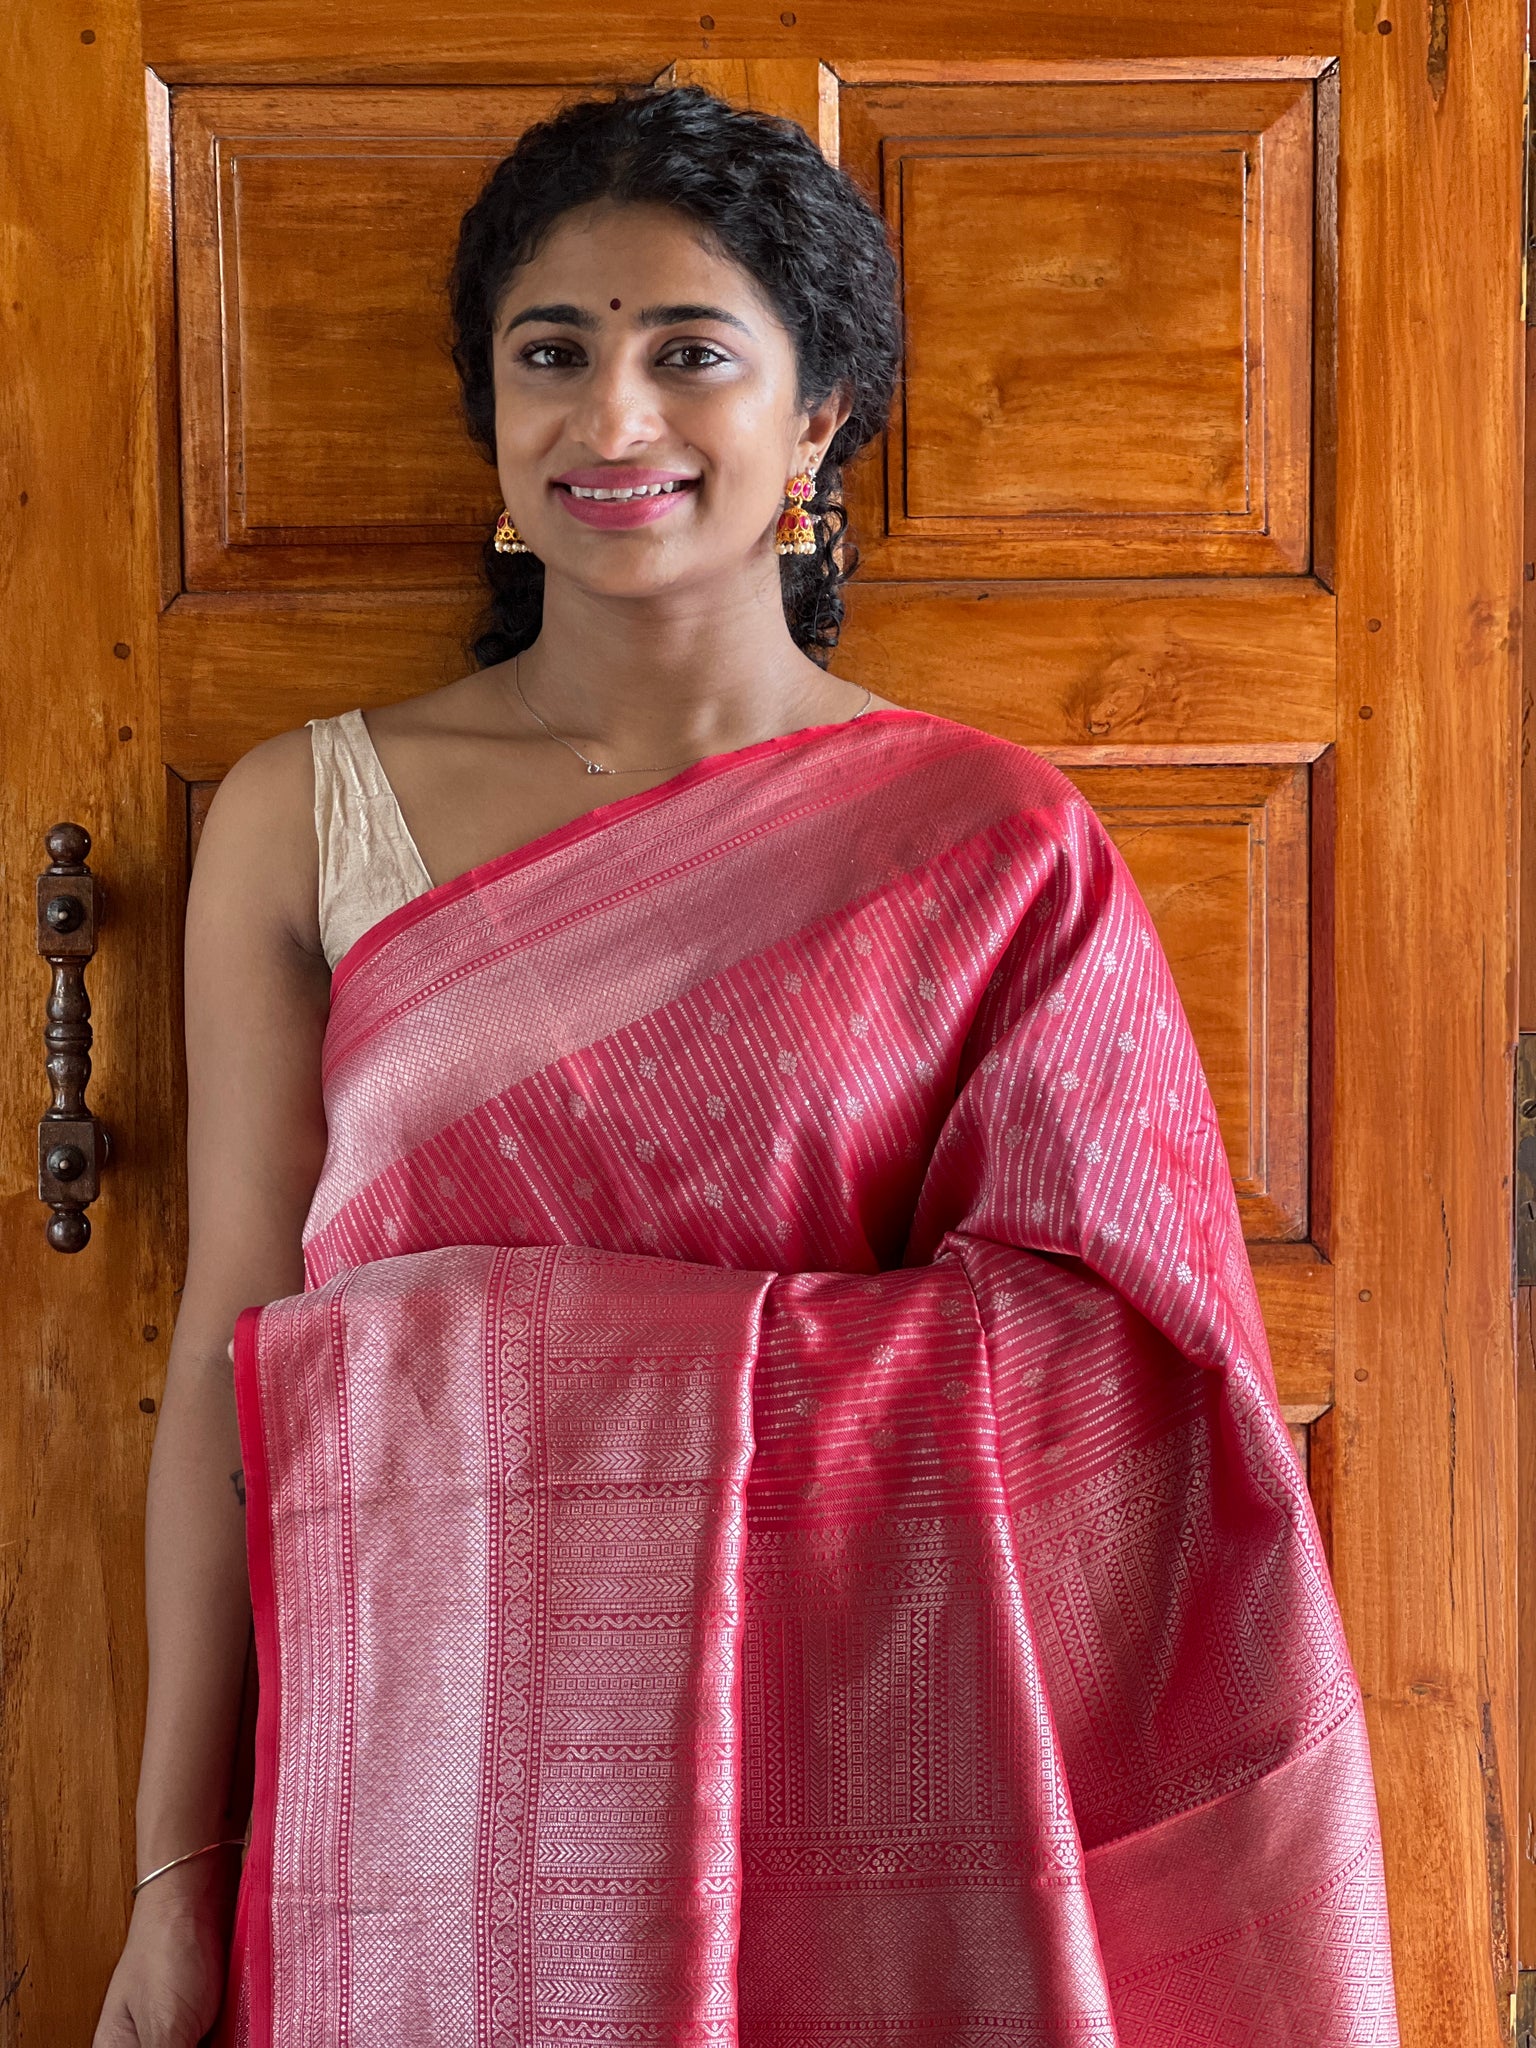 Red Kanchipuram Silk Sarees: Buy Latest Designs Online | Utsav Fashion